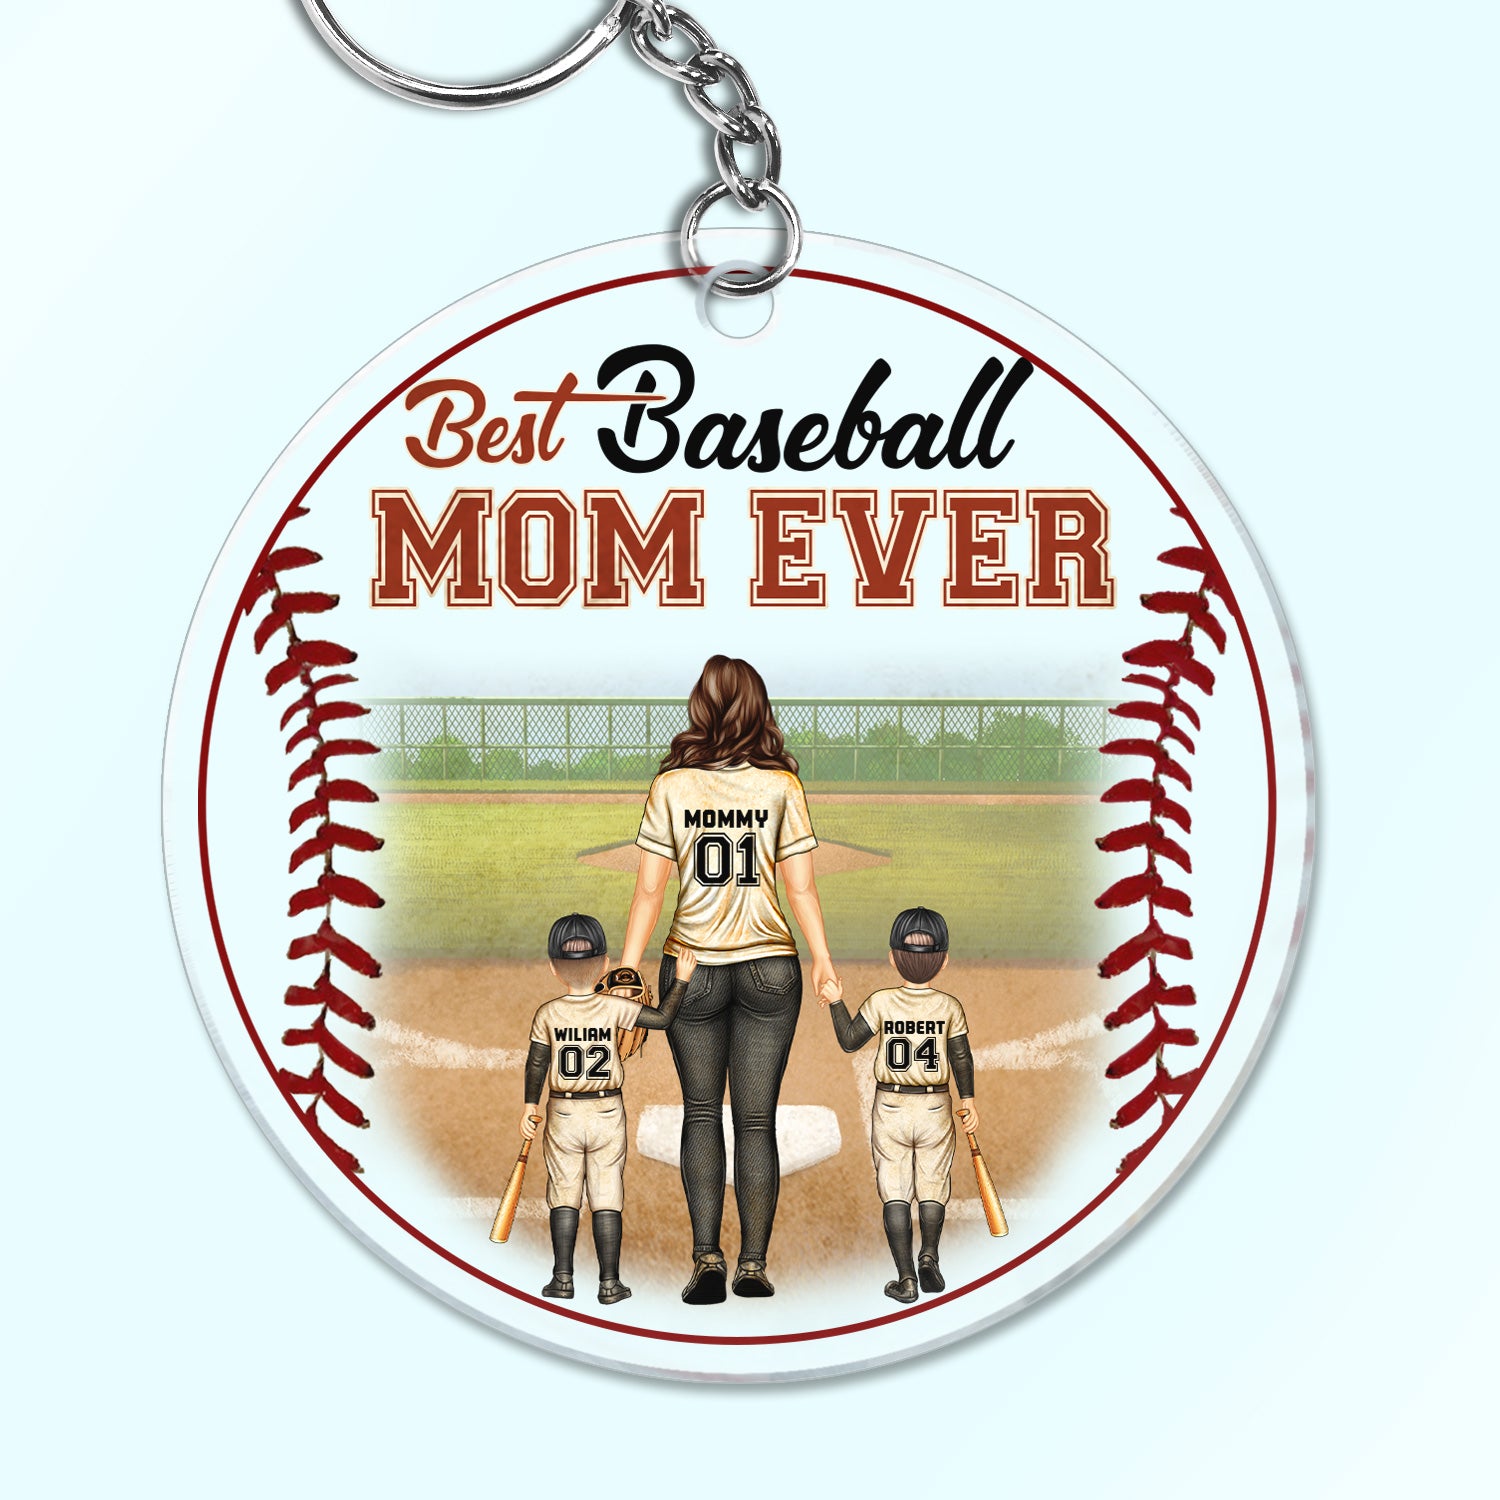 Best Baseball Softball Mom Ever - Birthday, Loving Gift For Sport Fan, Mom, Mother - Personalized Custom Acrylic Keychain